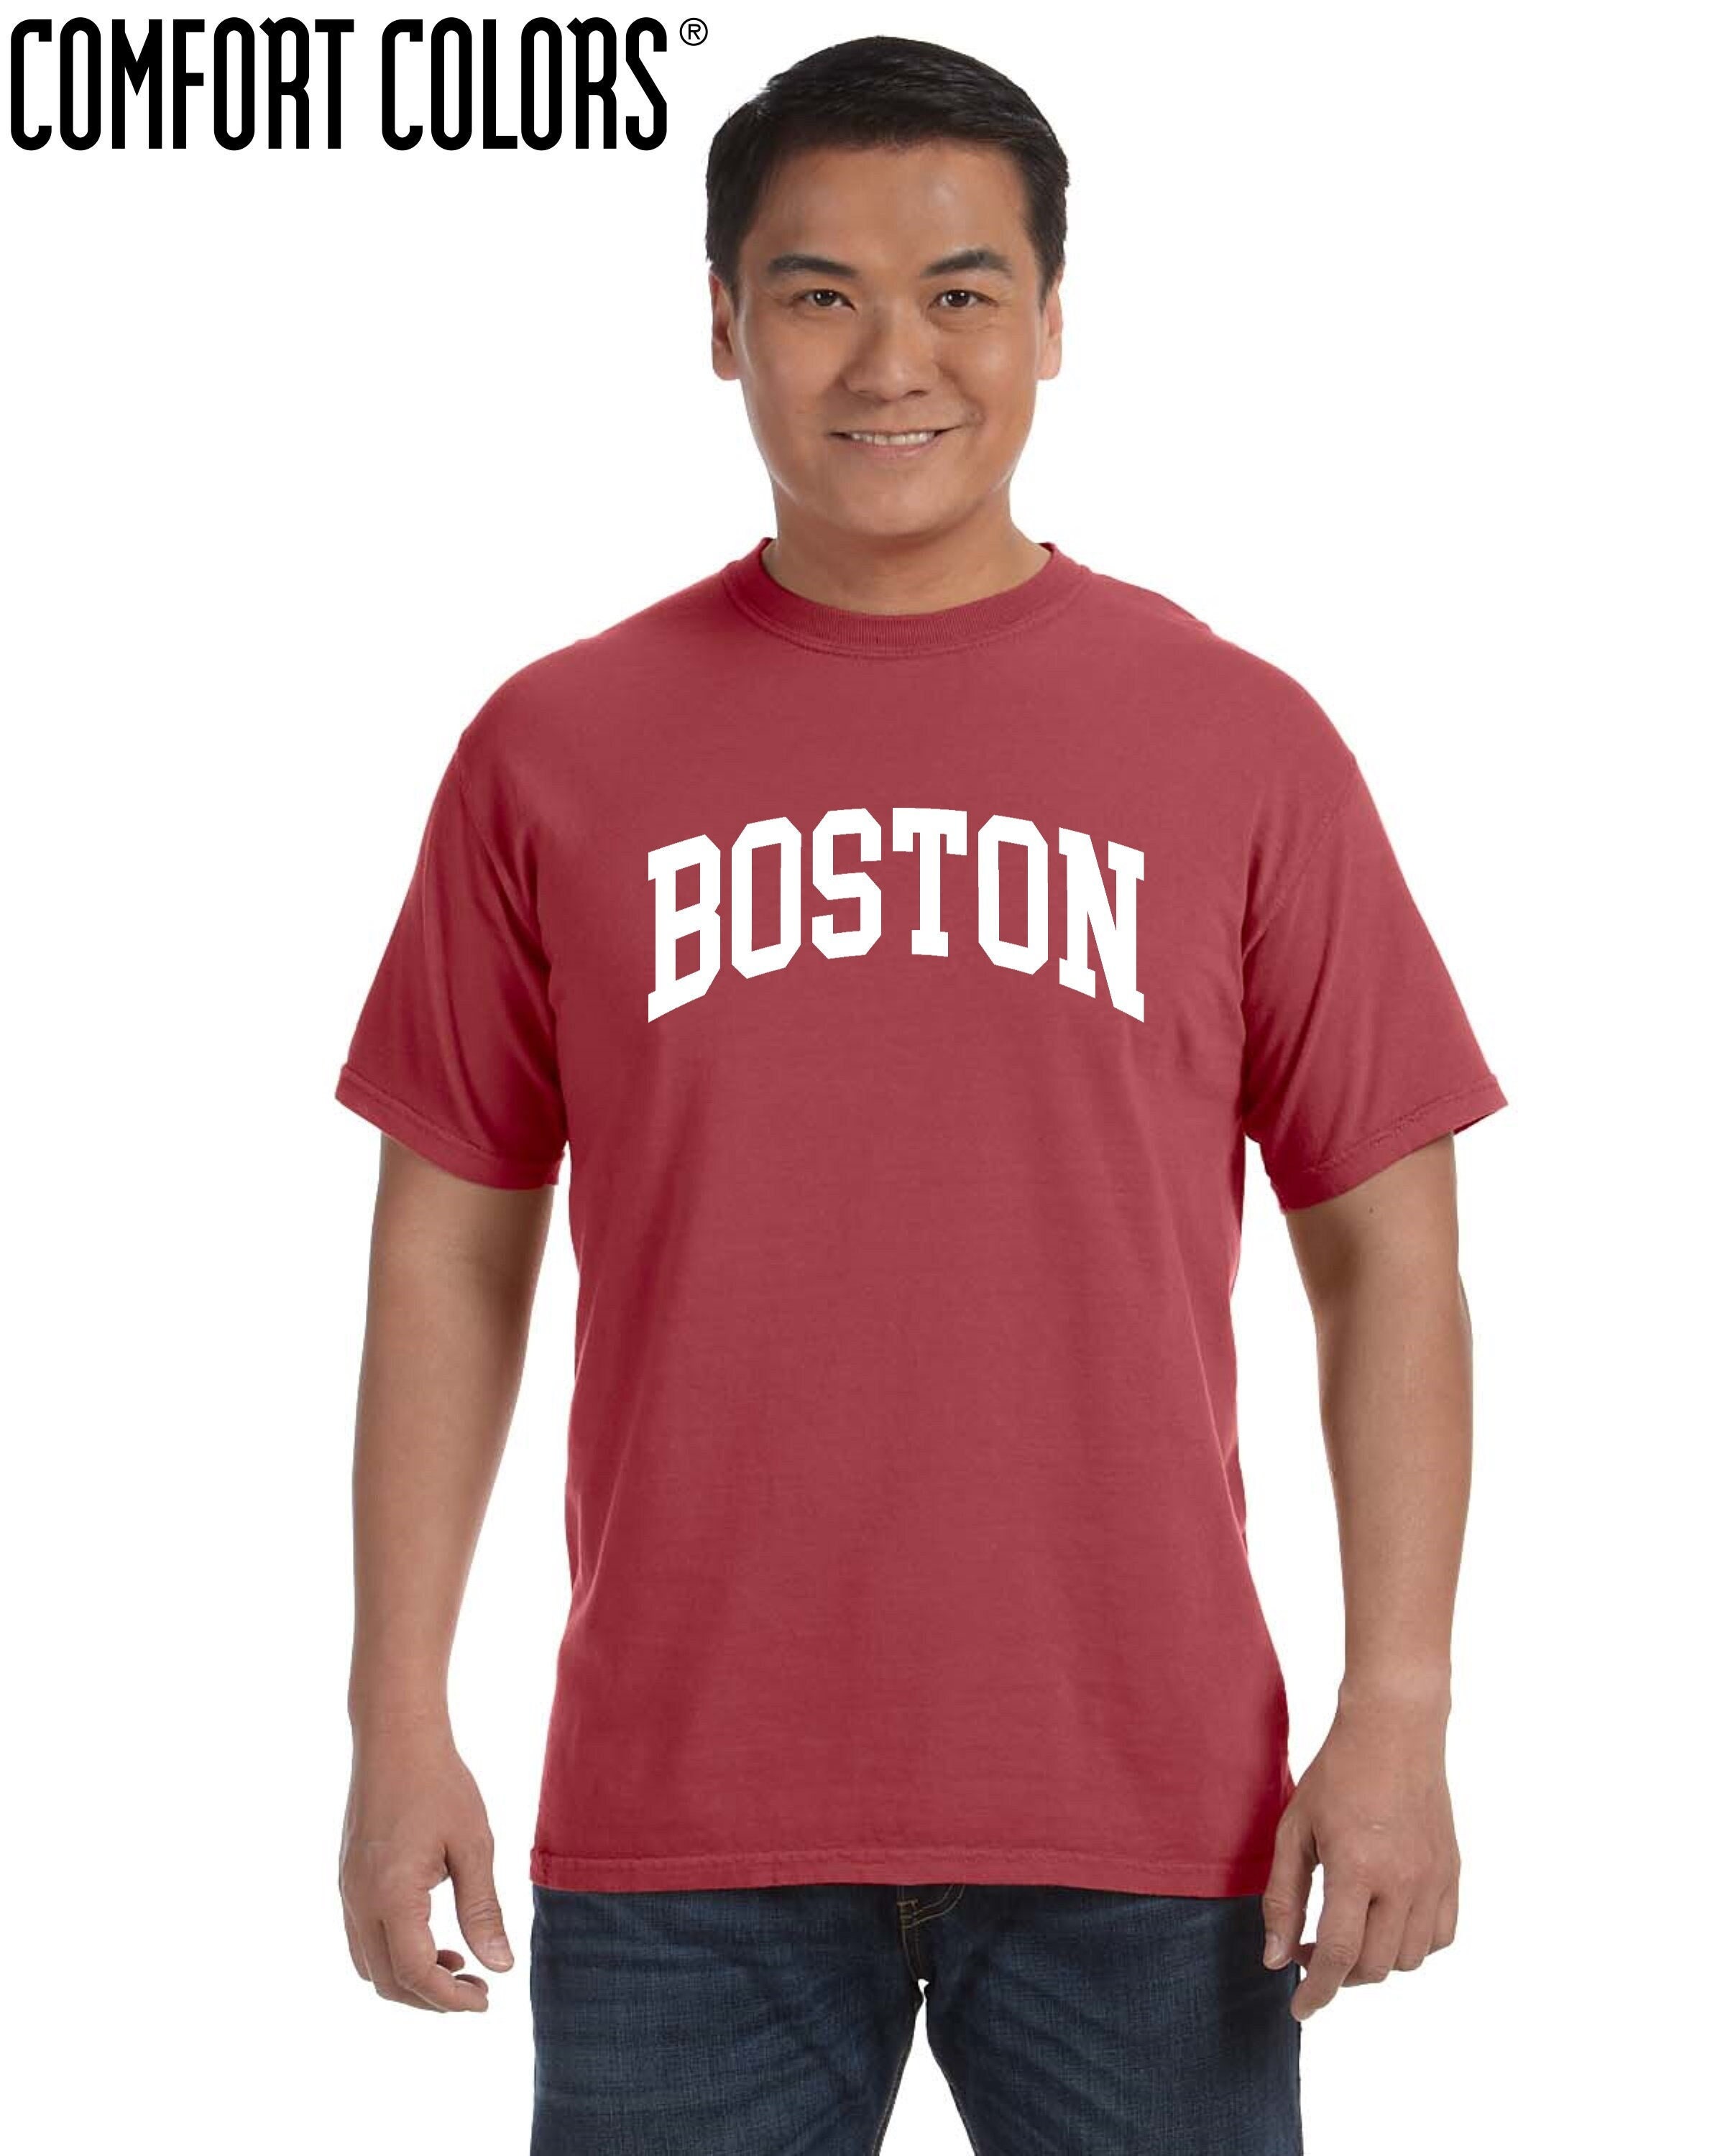 Boston Comfort Colors Shirt Boston Gift Shirt Boston Shirt 